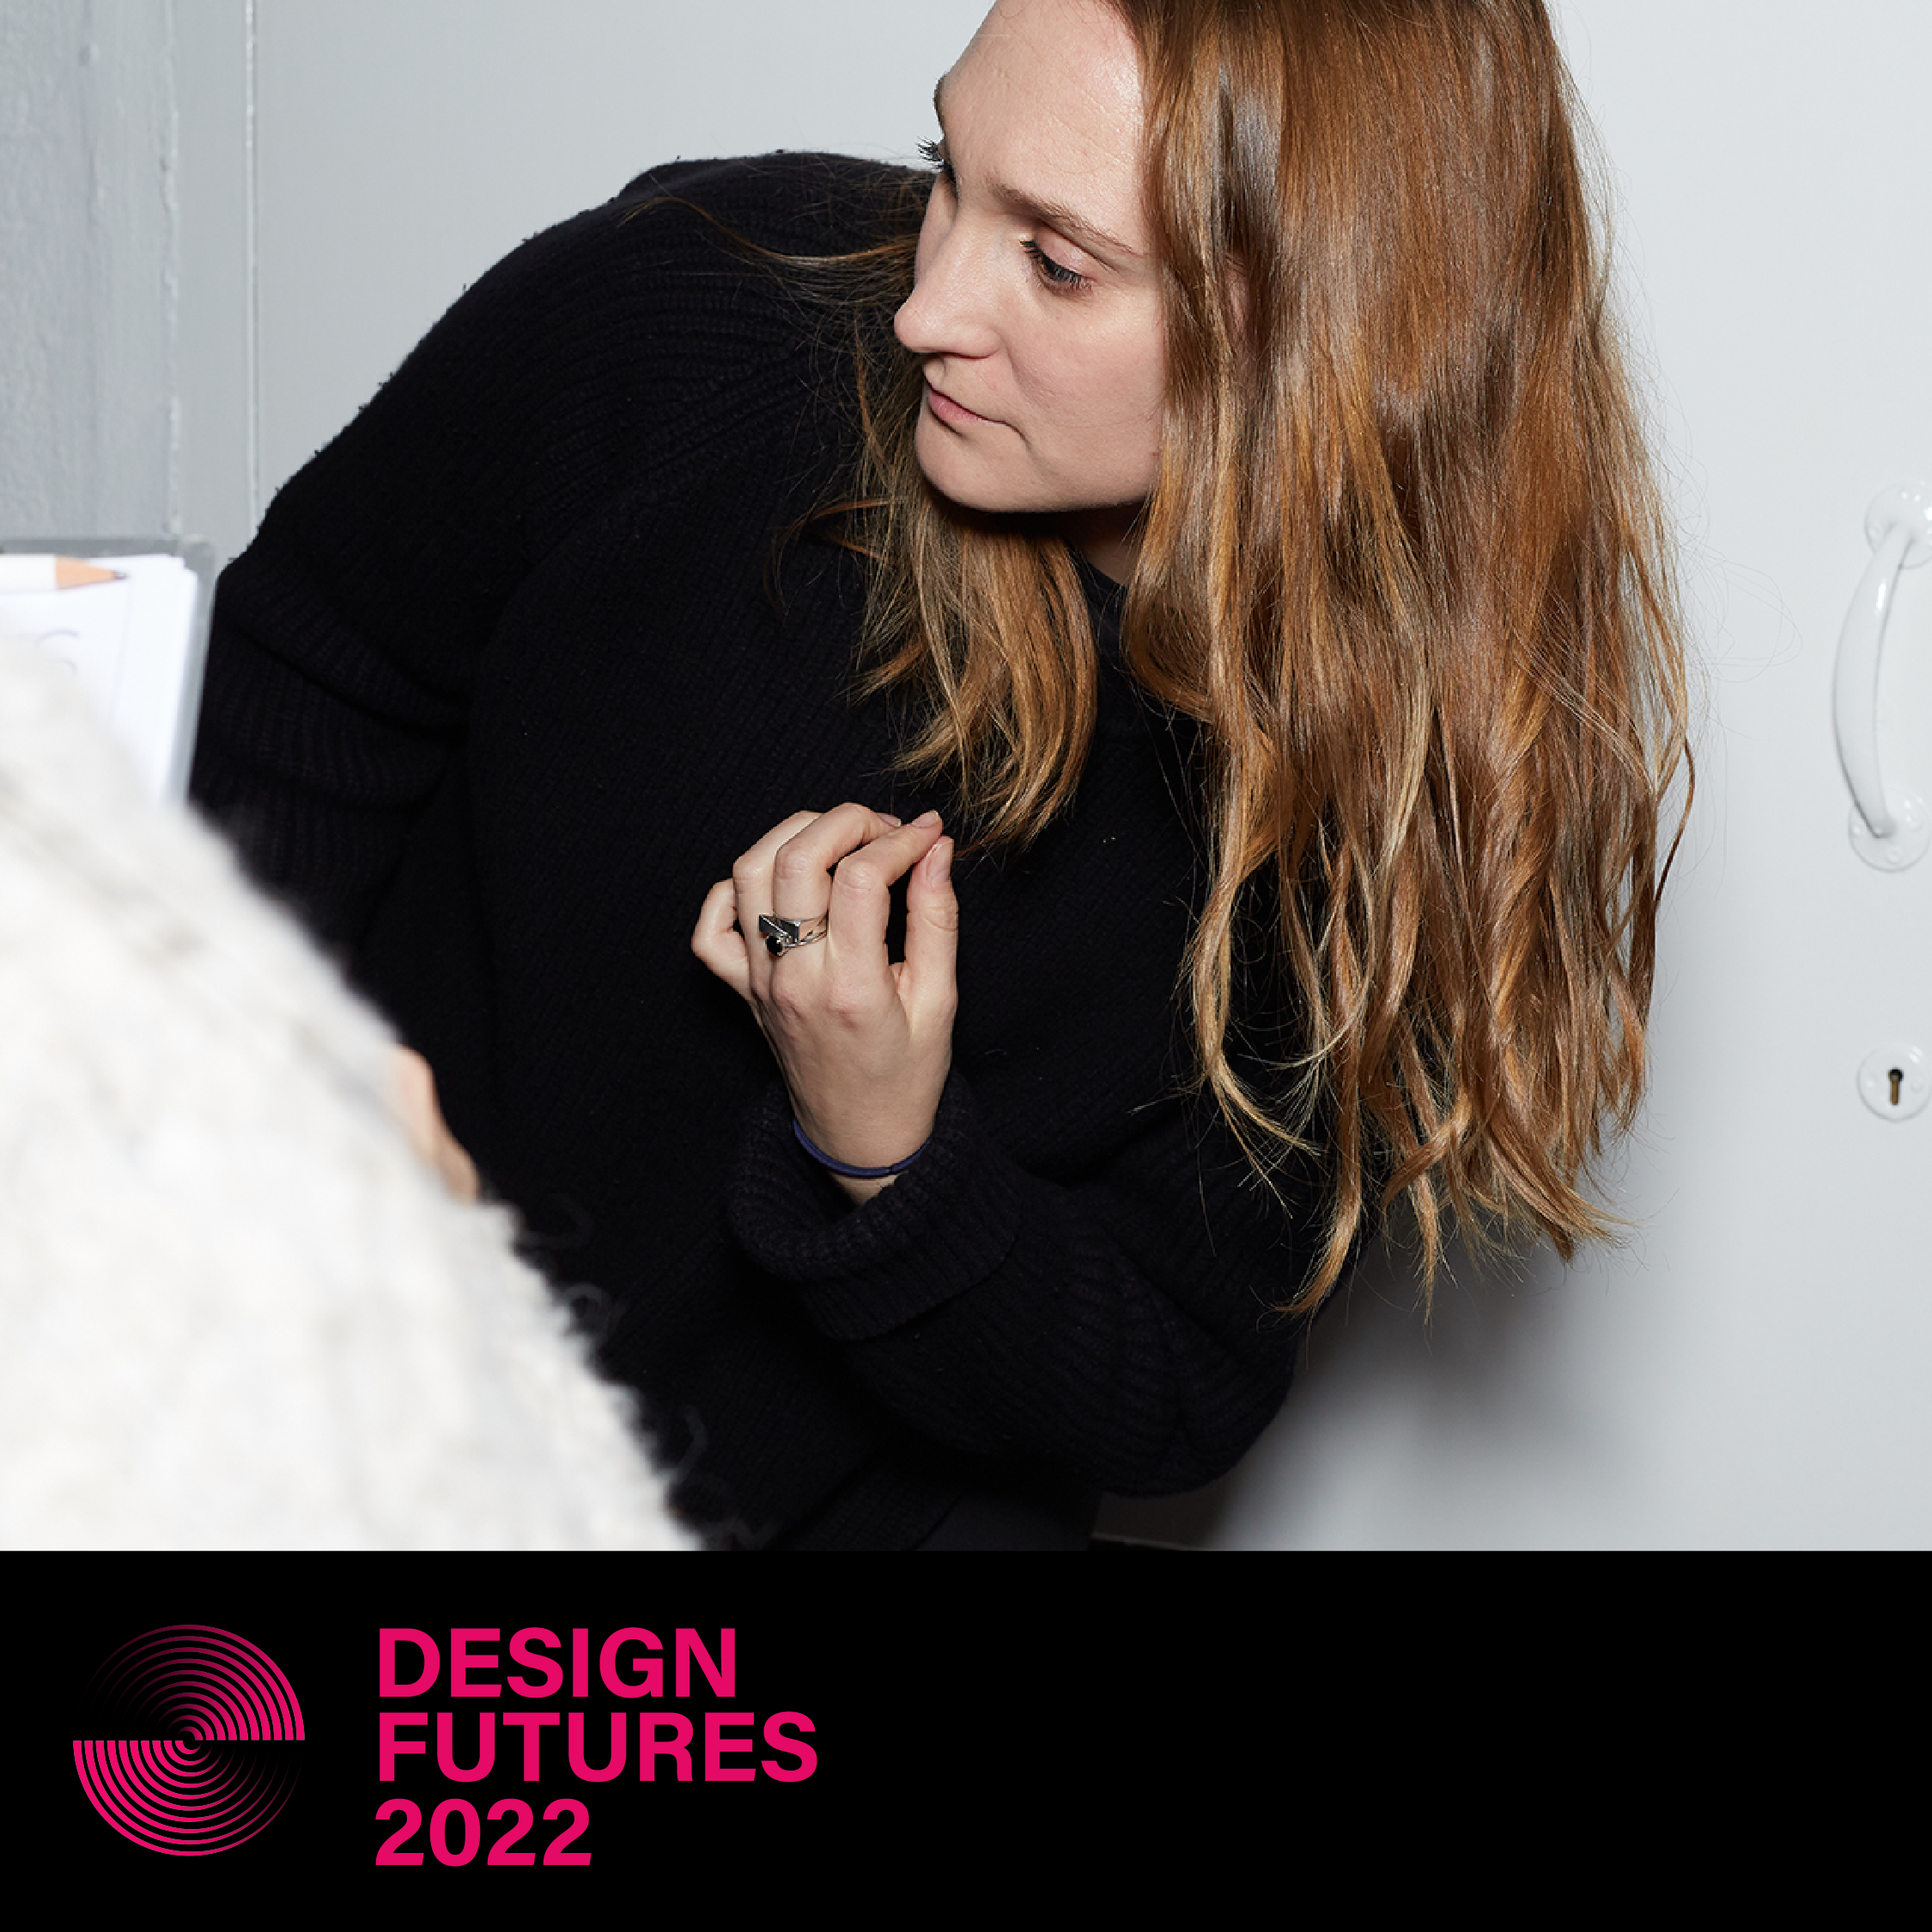 Meet Design Futures 2022 Judge: Phoebe English